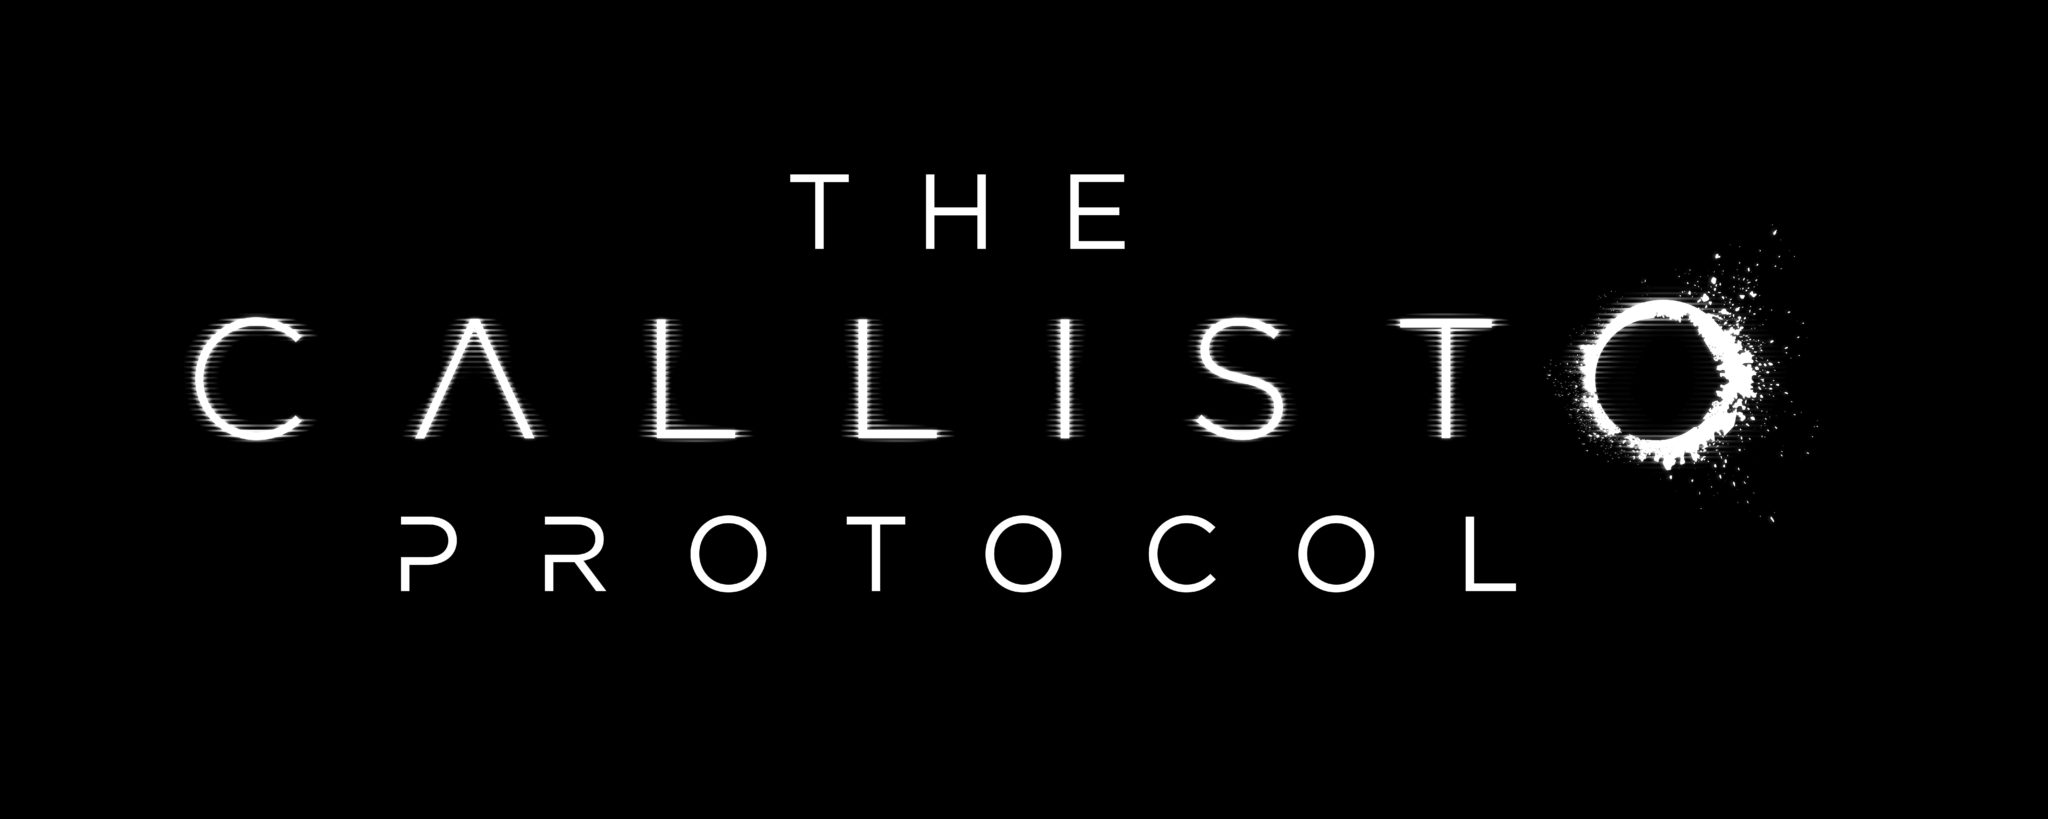 the callisto protocol monster